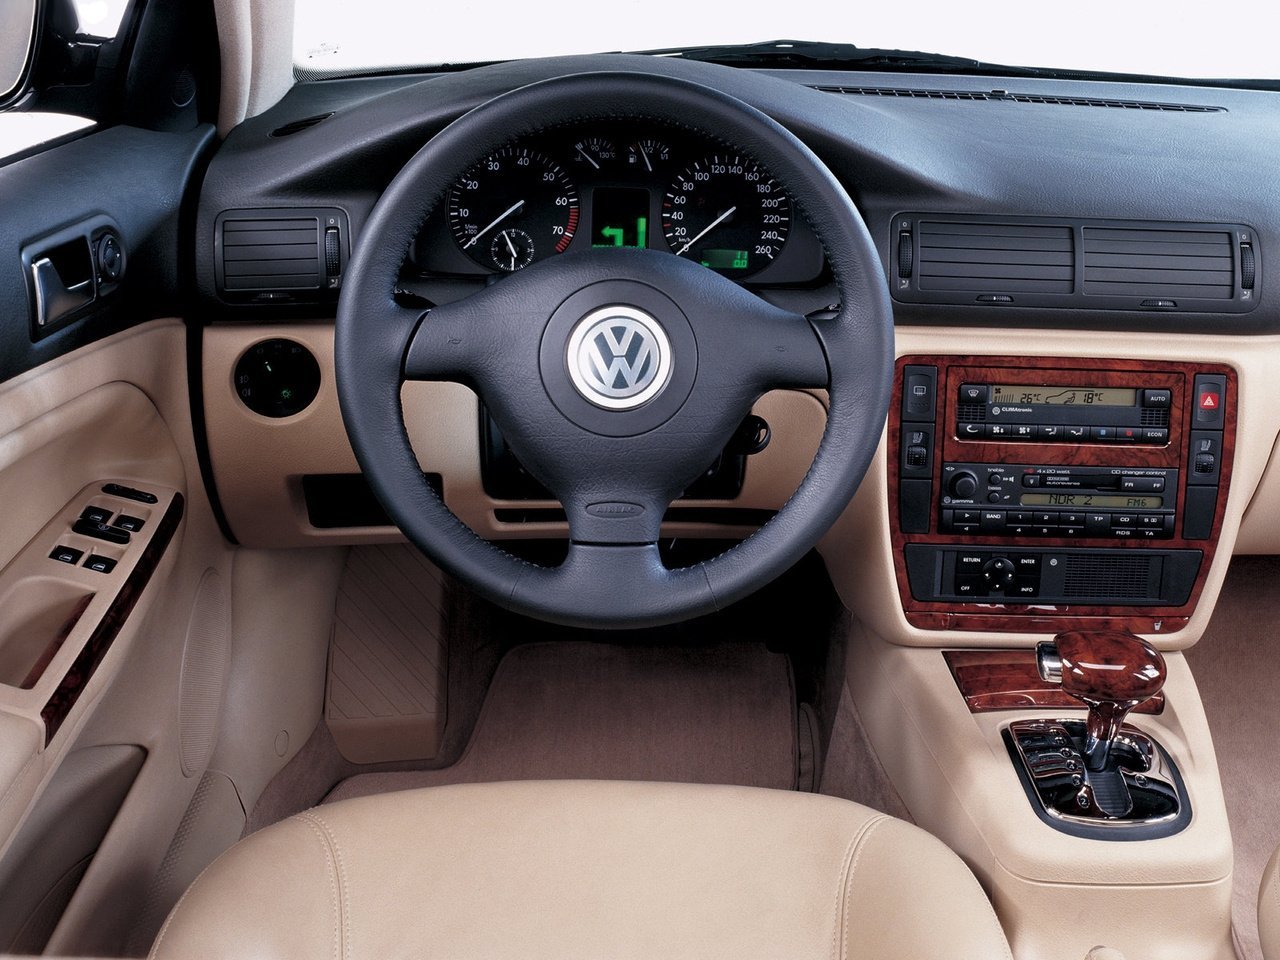 универсал Volkswagen Passat 1997 - 2000г выпуска модификация 1.6 AT (101 л.с.)